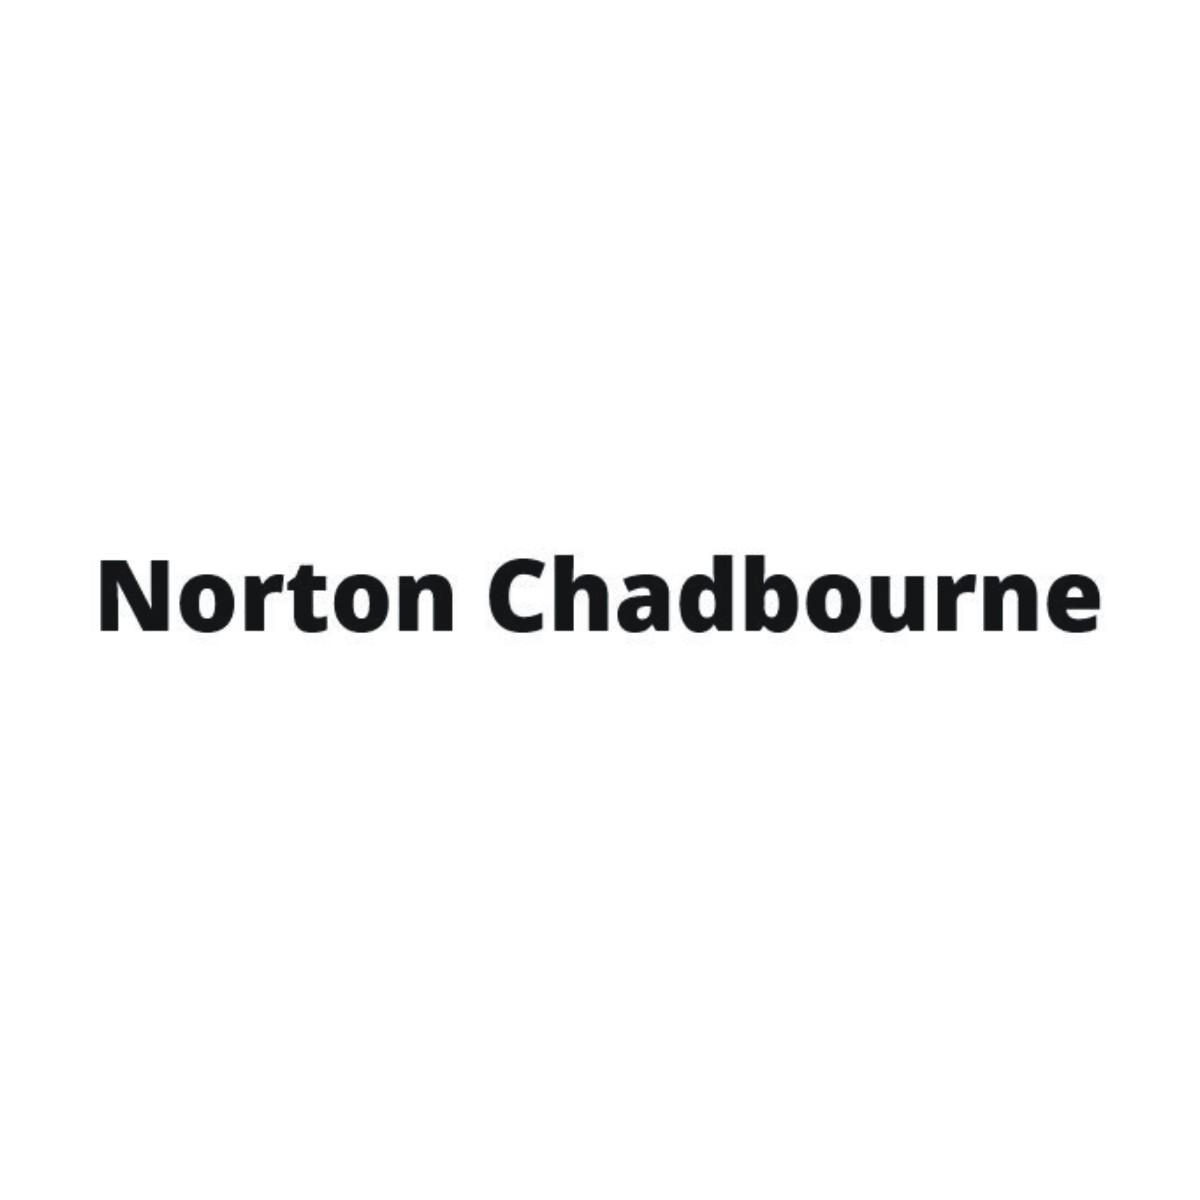 NORTON CHADBOURNE火葬商标转让费用买卖交易流程